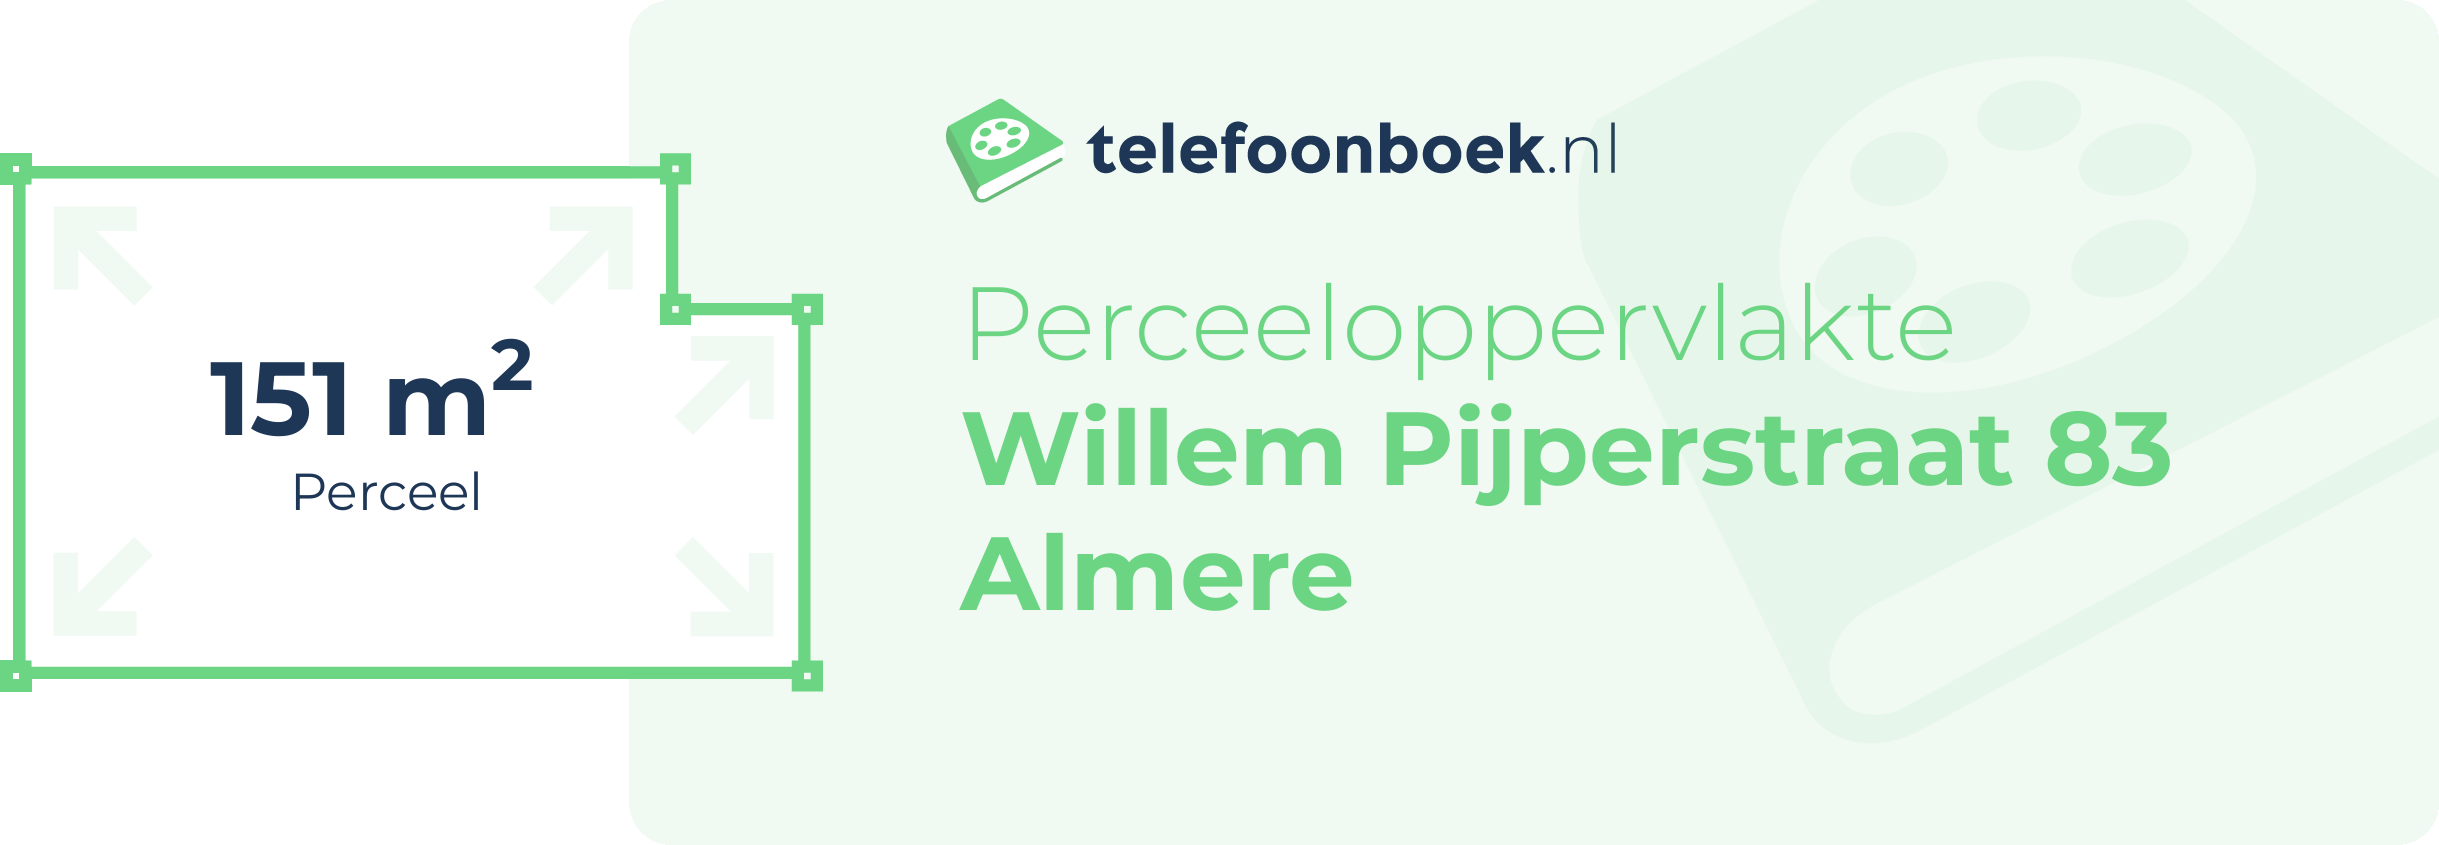 Perceeloppervlakte Willem Pijperstraat 83 Almere